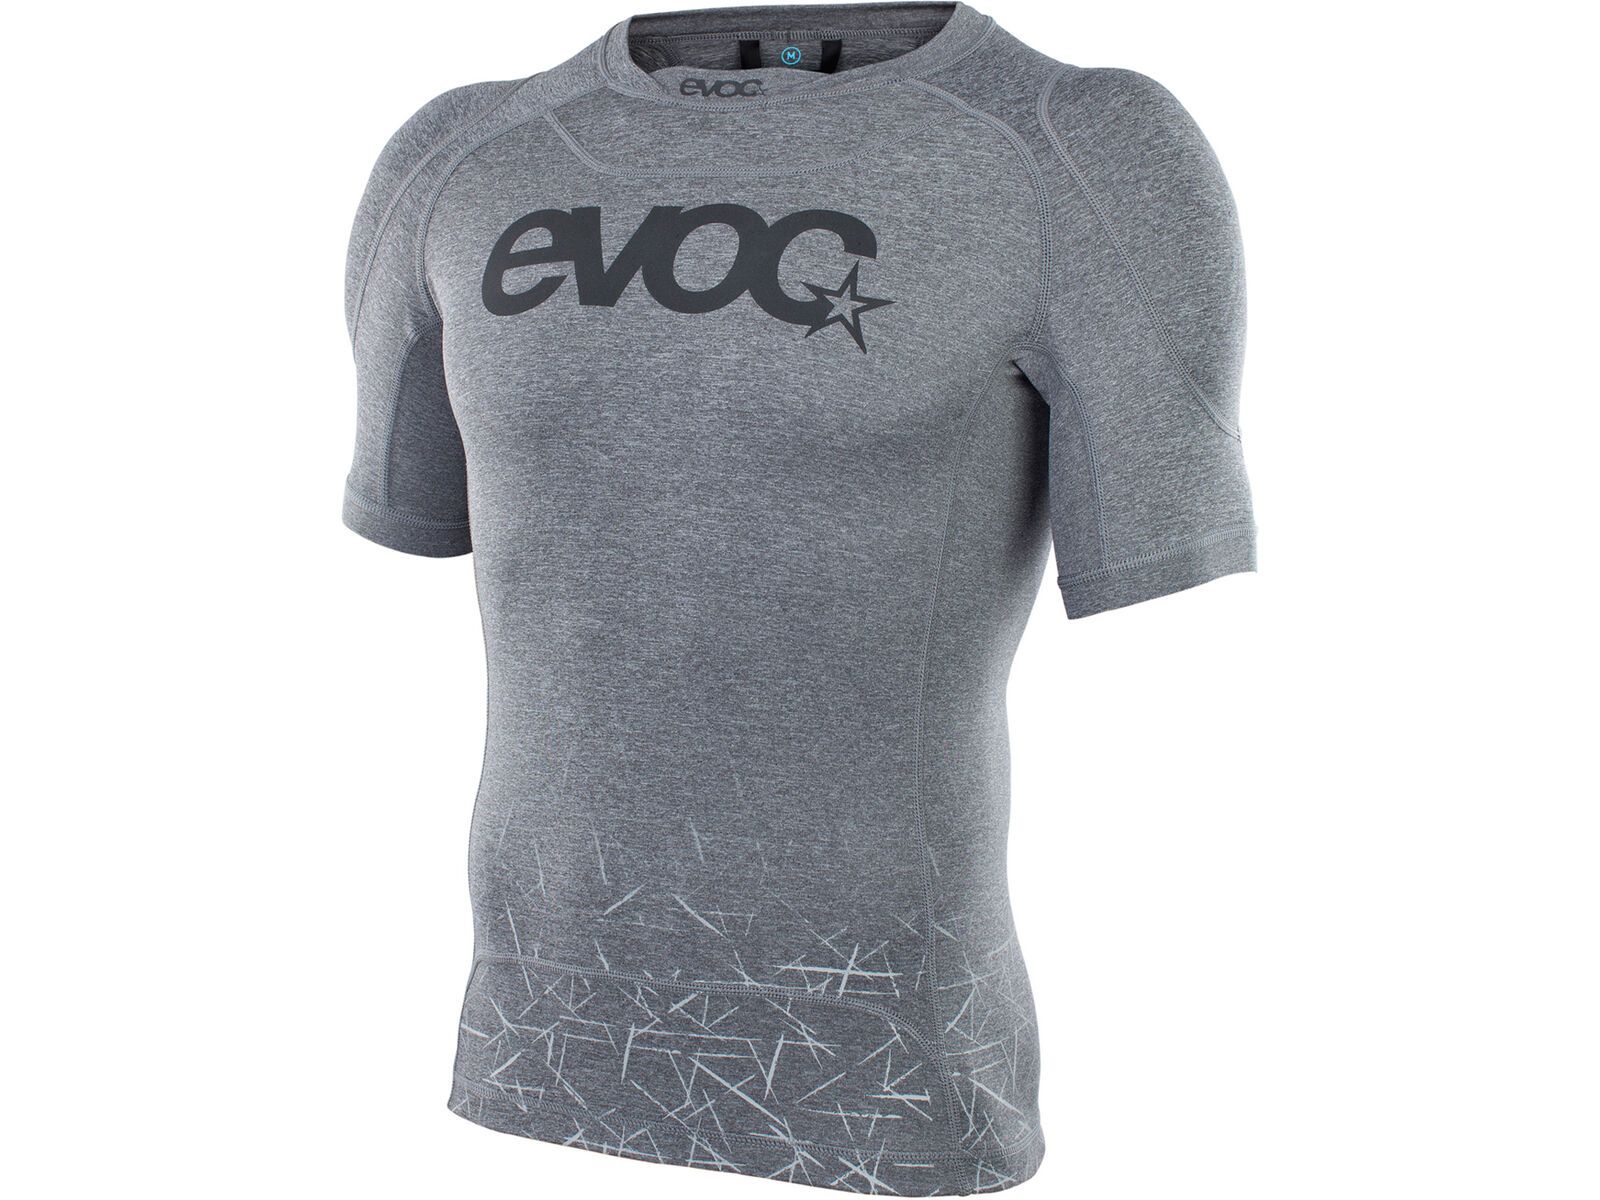 Evoc Enduro Shirt, carbon grey | Bild 1